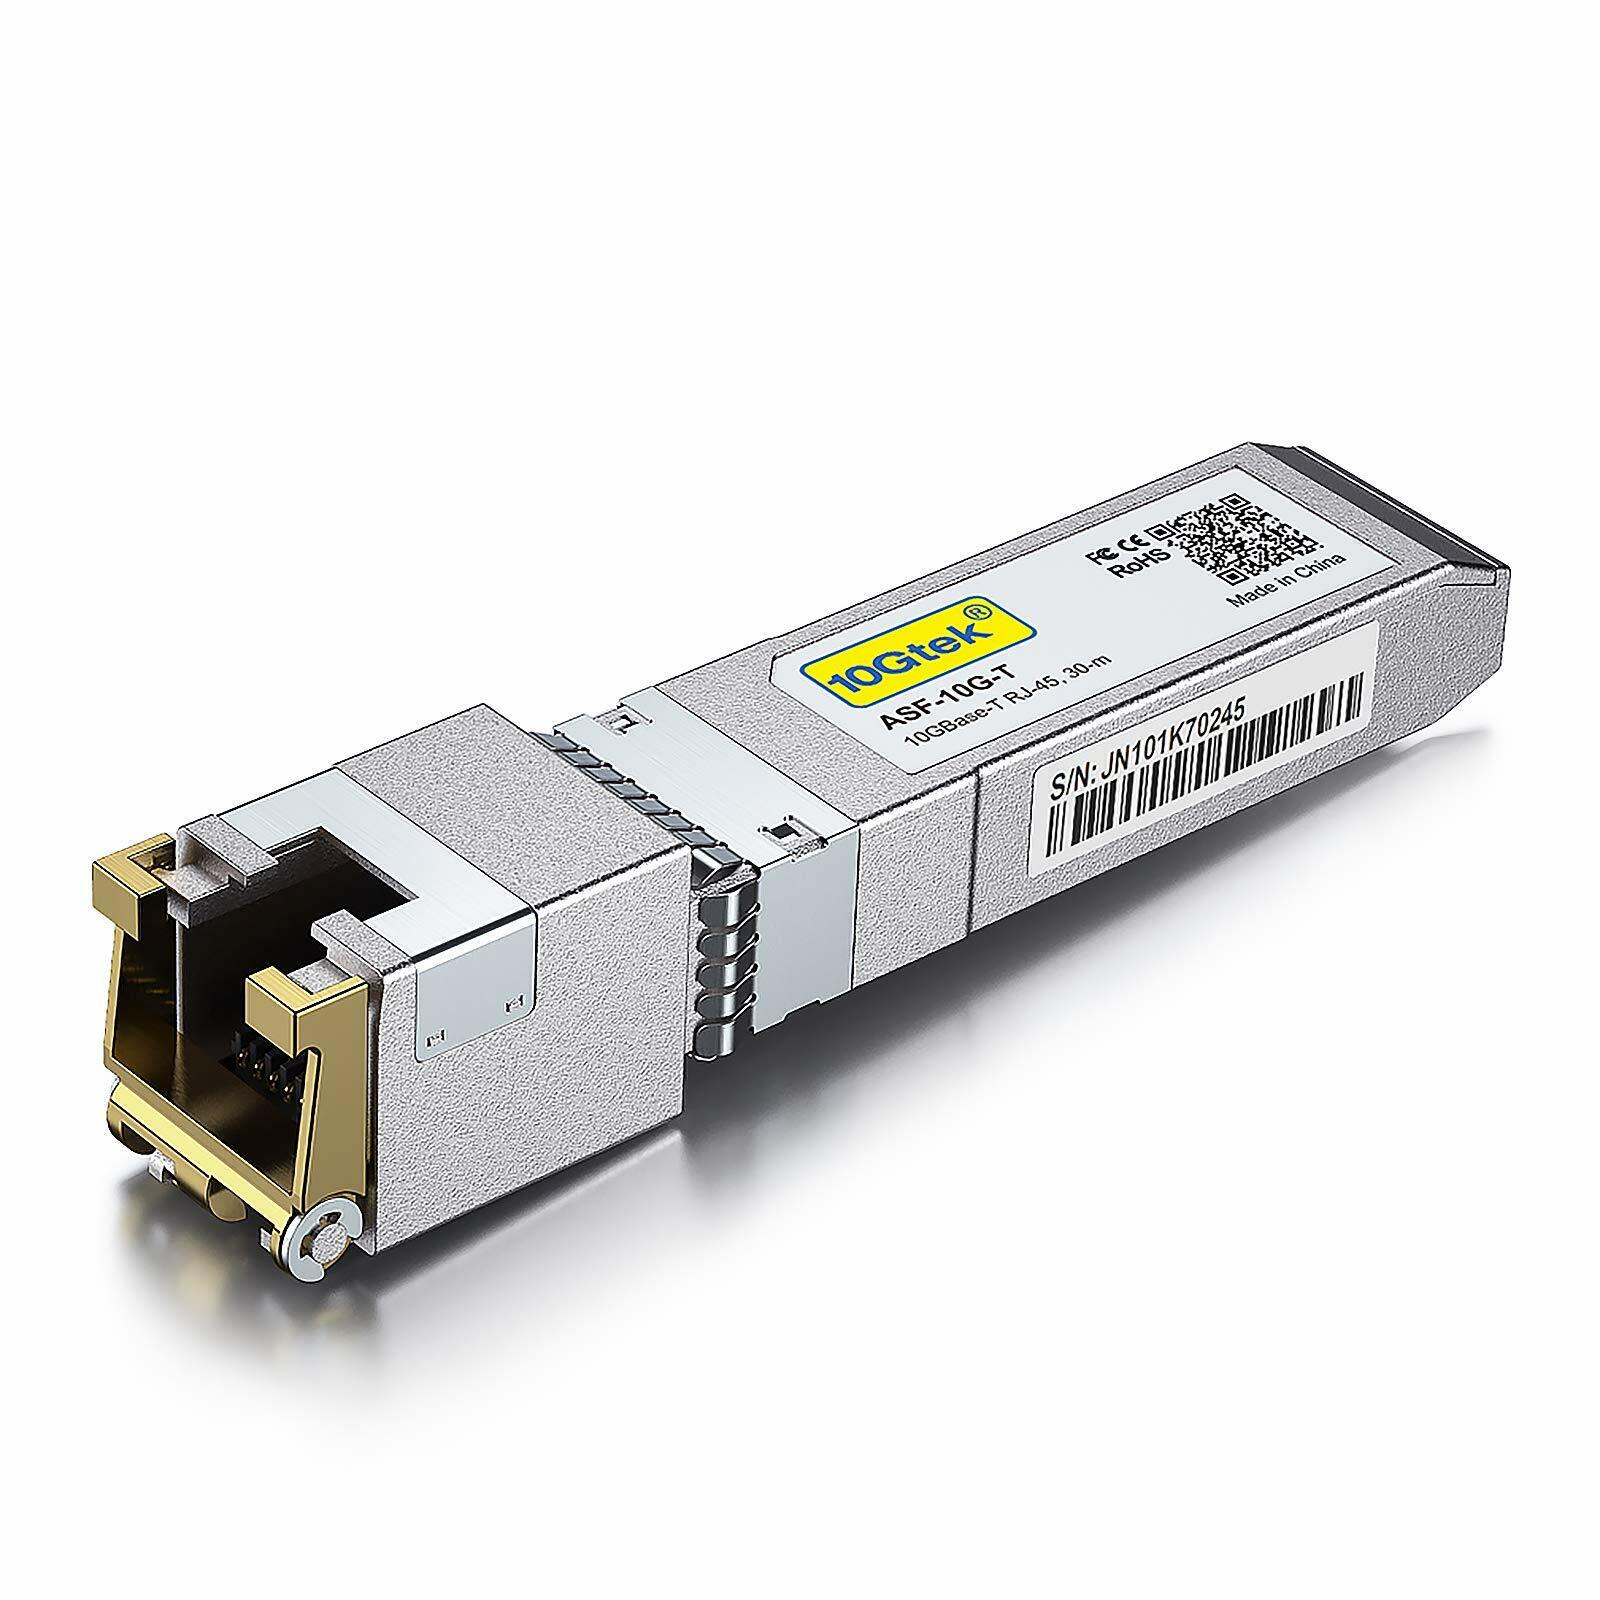 For Cisco, Juniper, Arista 10GBase-T 10G SFP+ to RJ45 Copper Transceiver Module